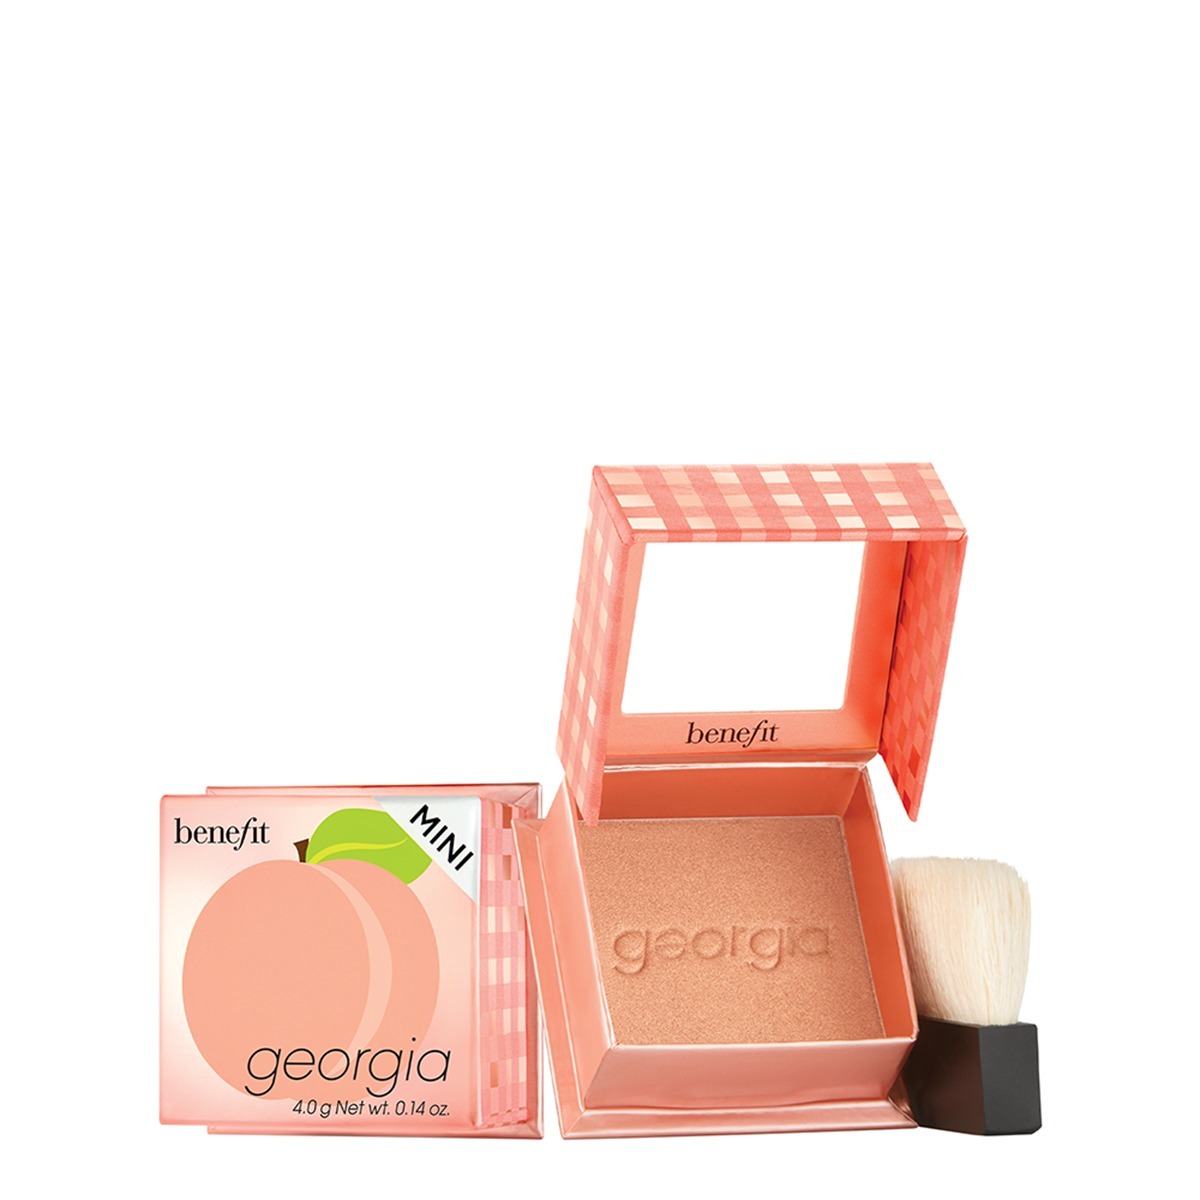 Benefit Cosmetics Georgia 2.0 Blush Mini